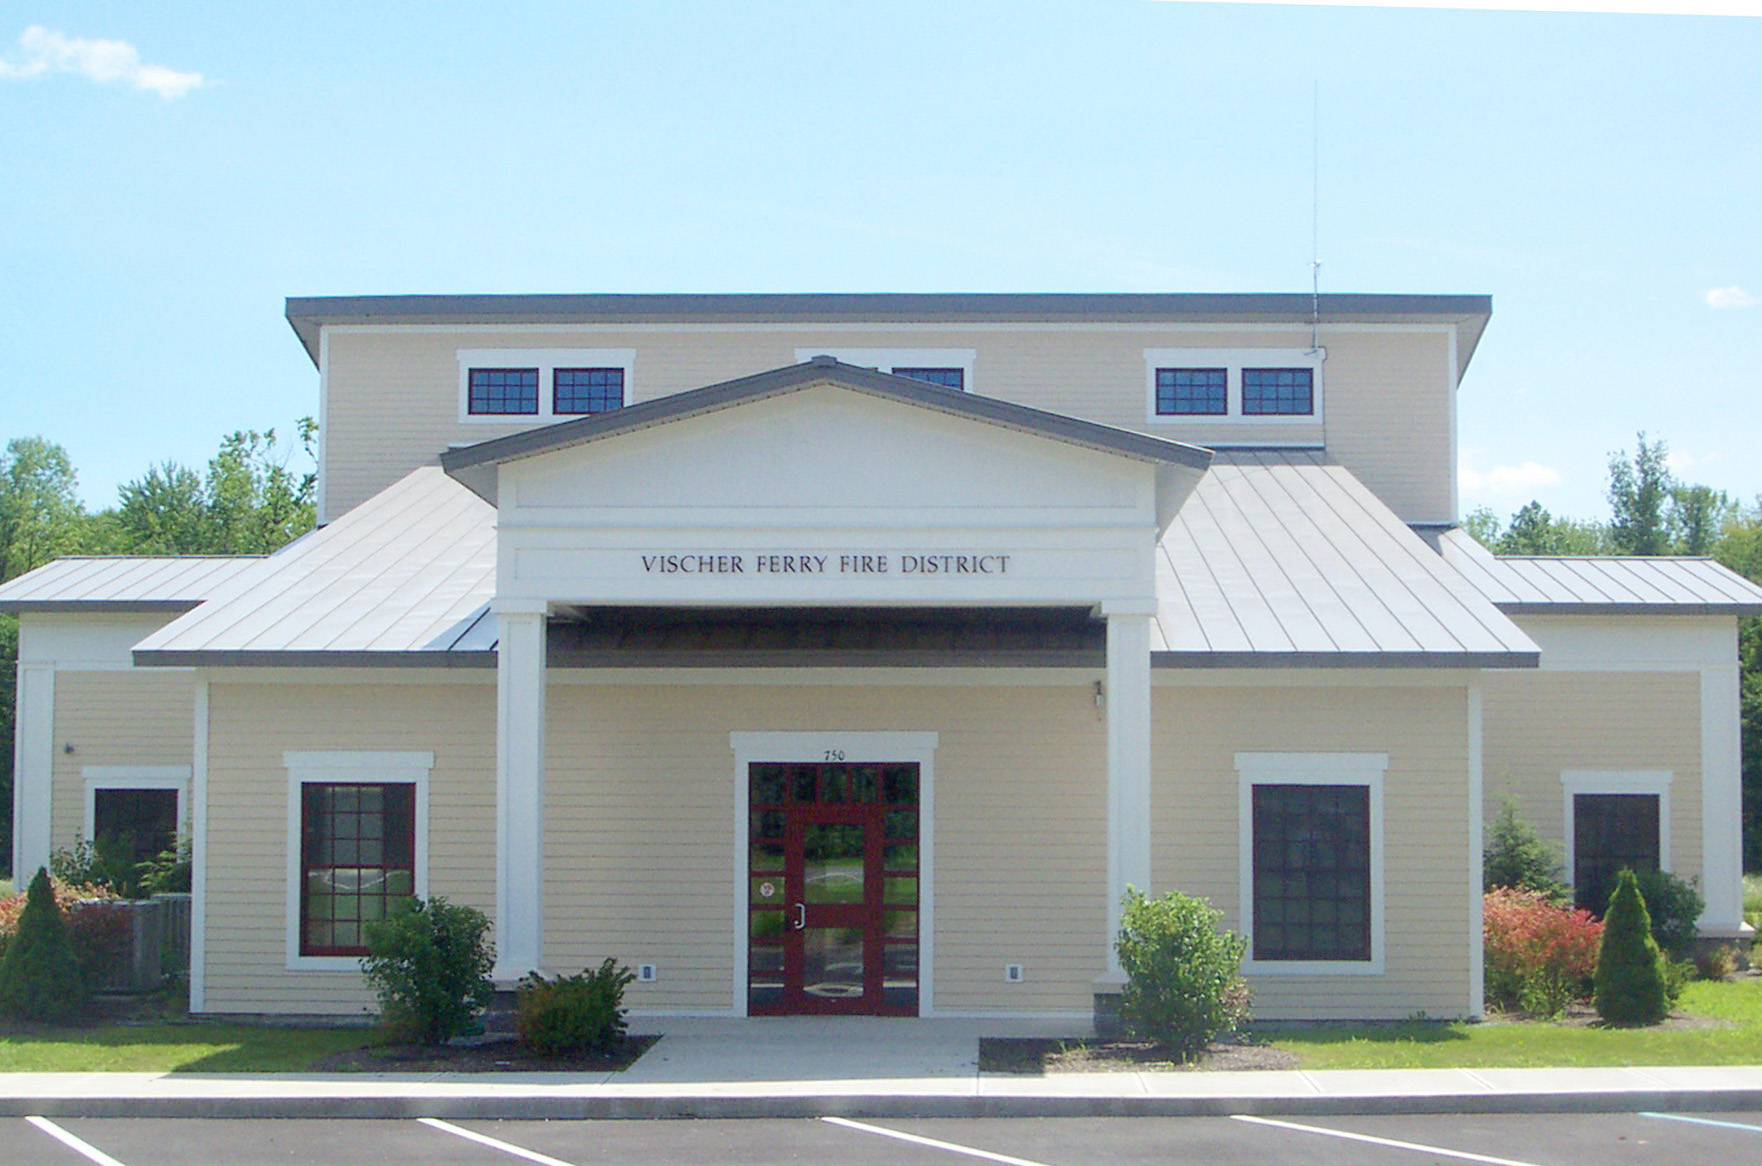 Vischer Ferry Fire District